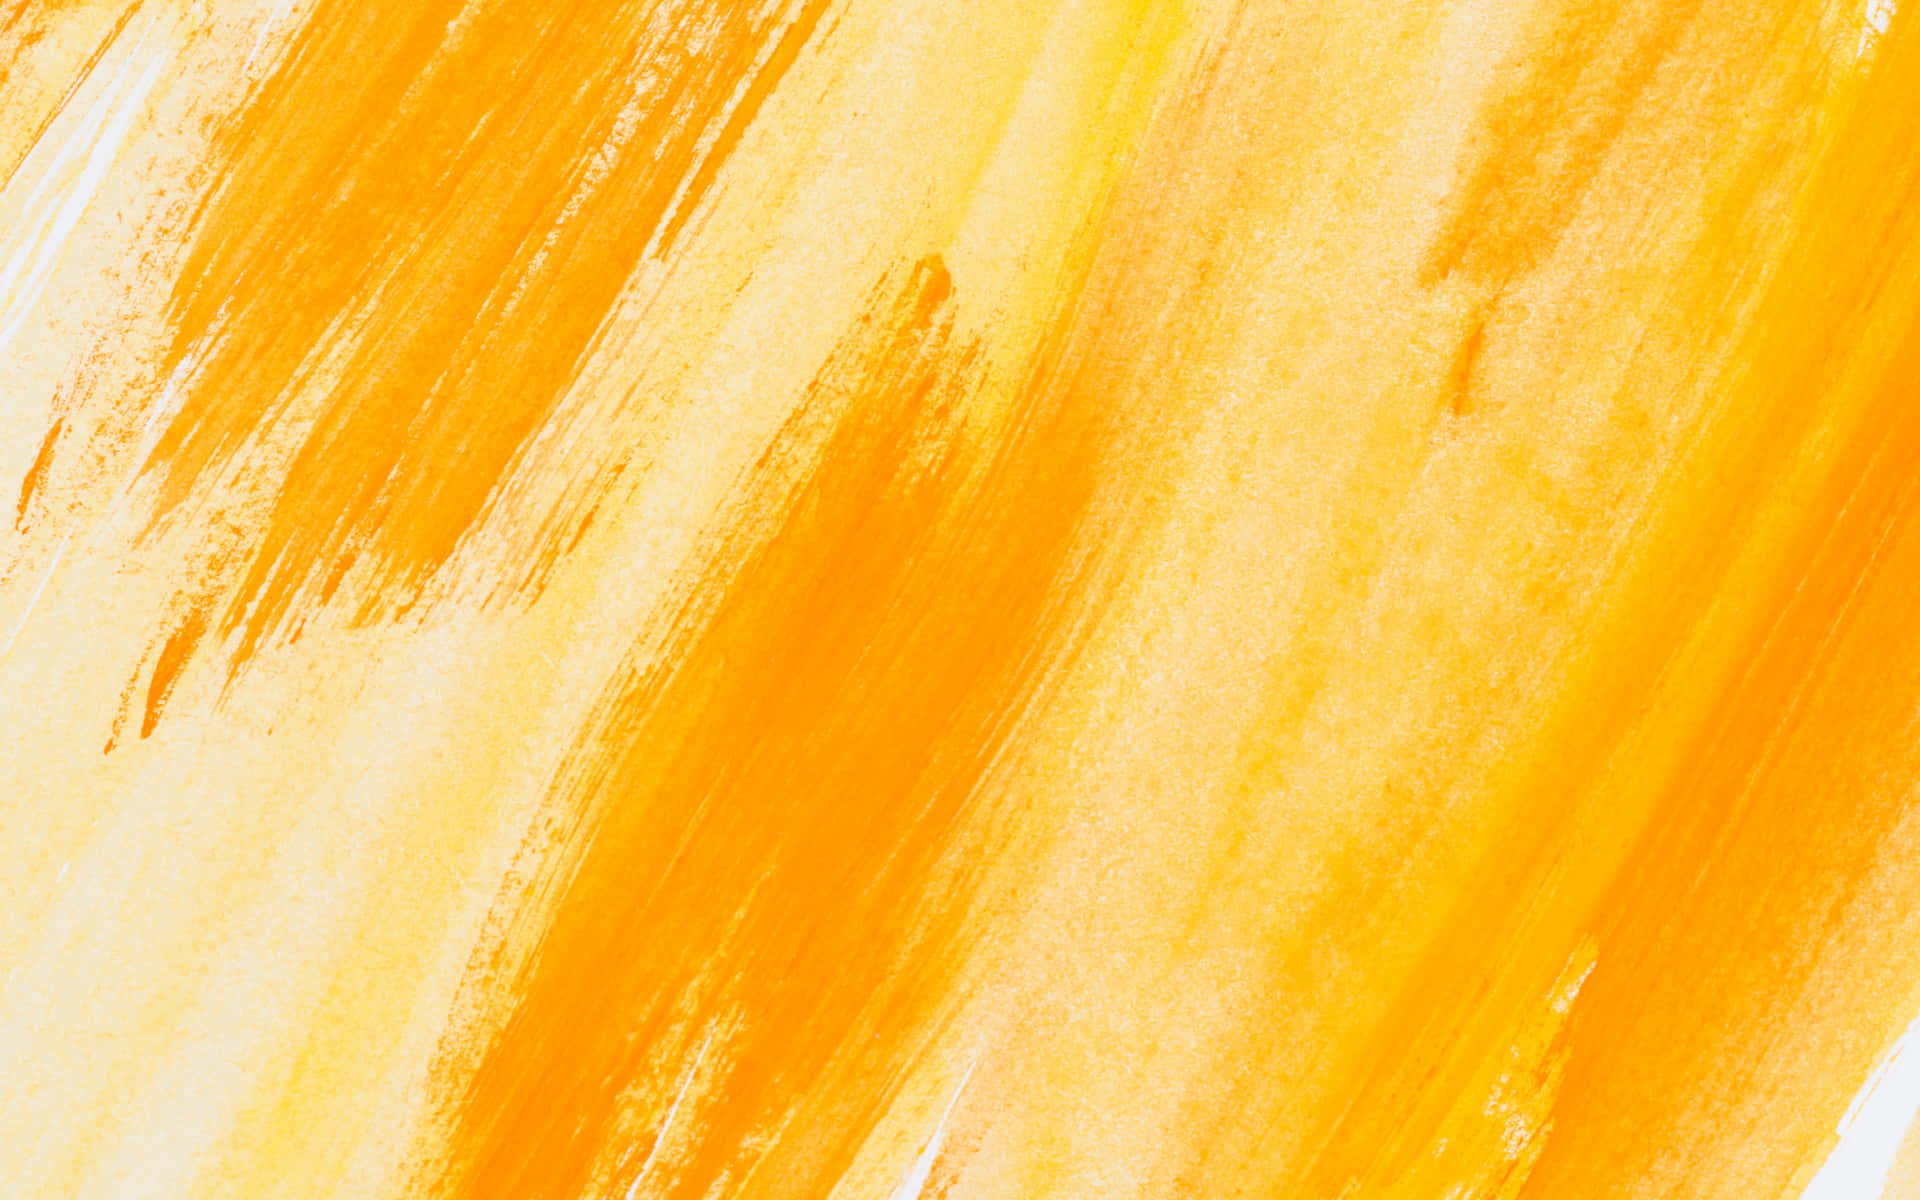 Yellow And Orange Background